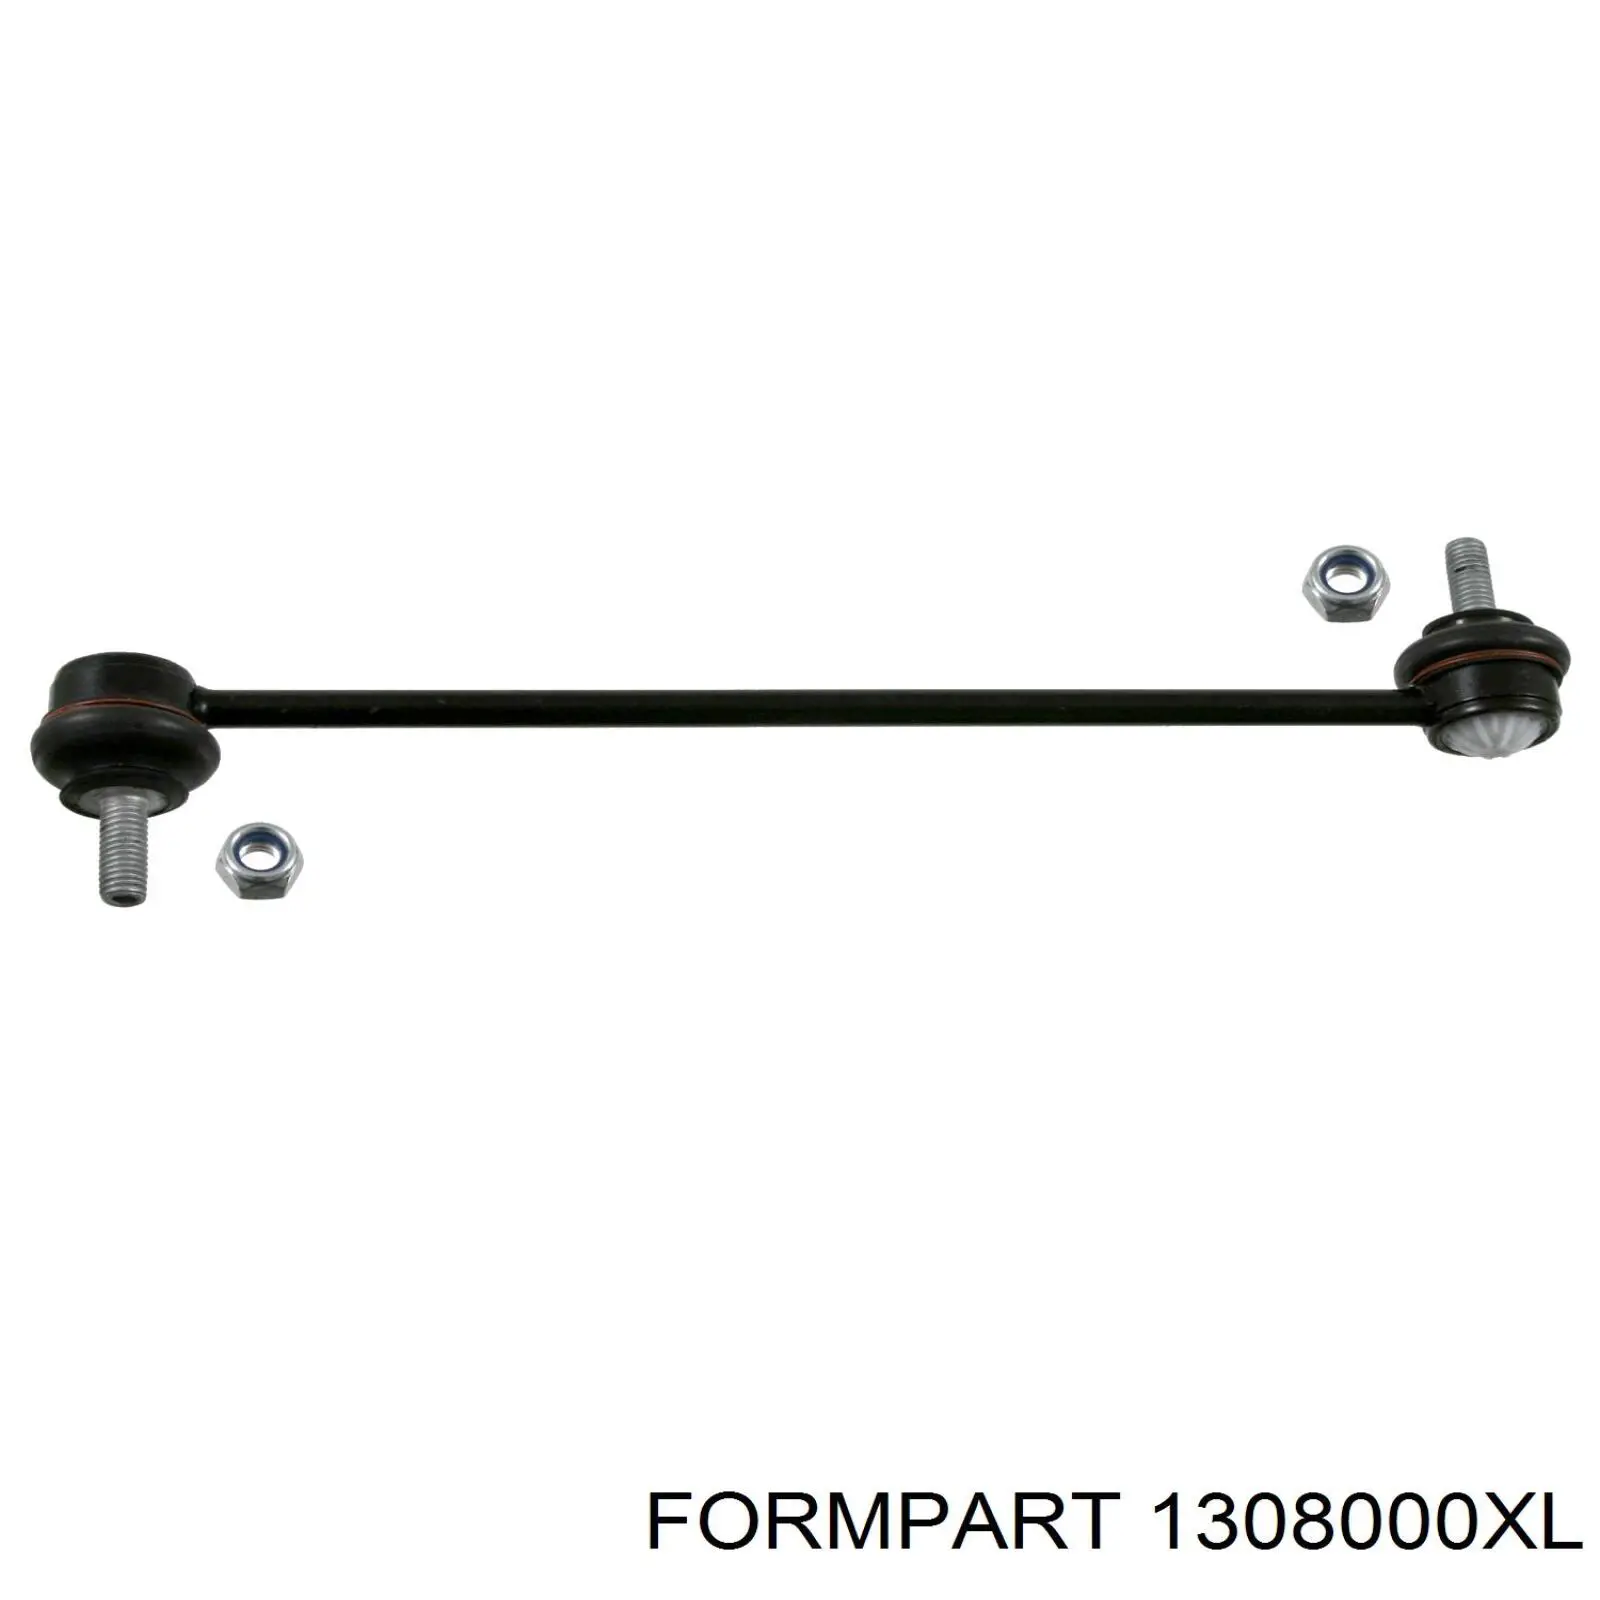 1308000-XL Formpart/Otoform montante de estabilizador dianteiro